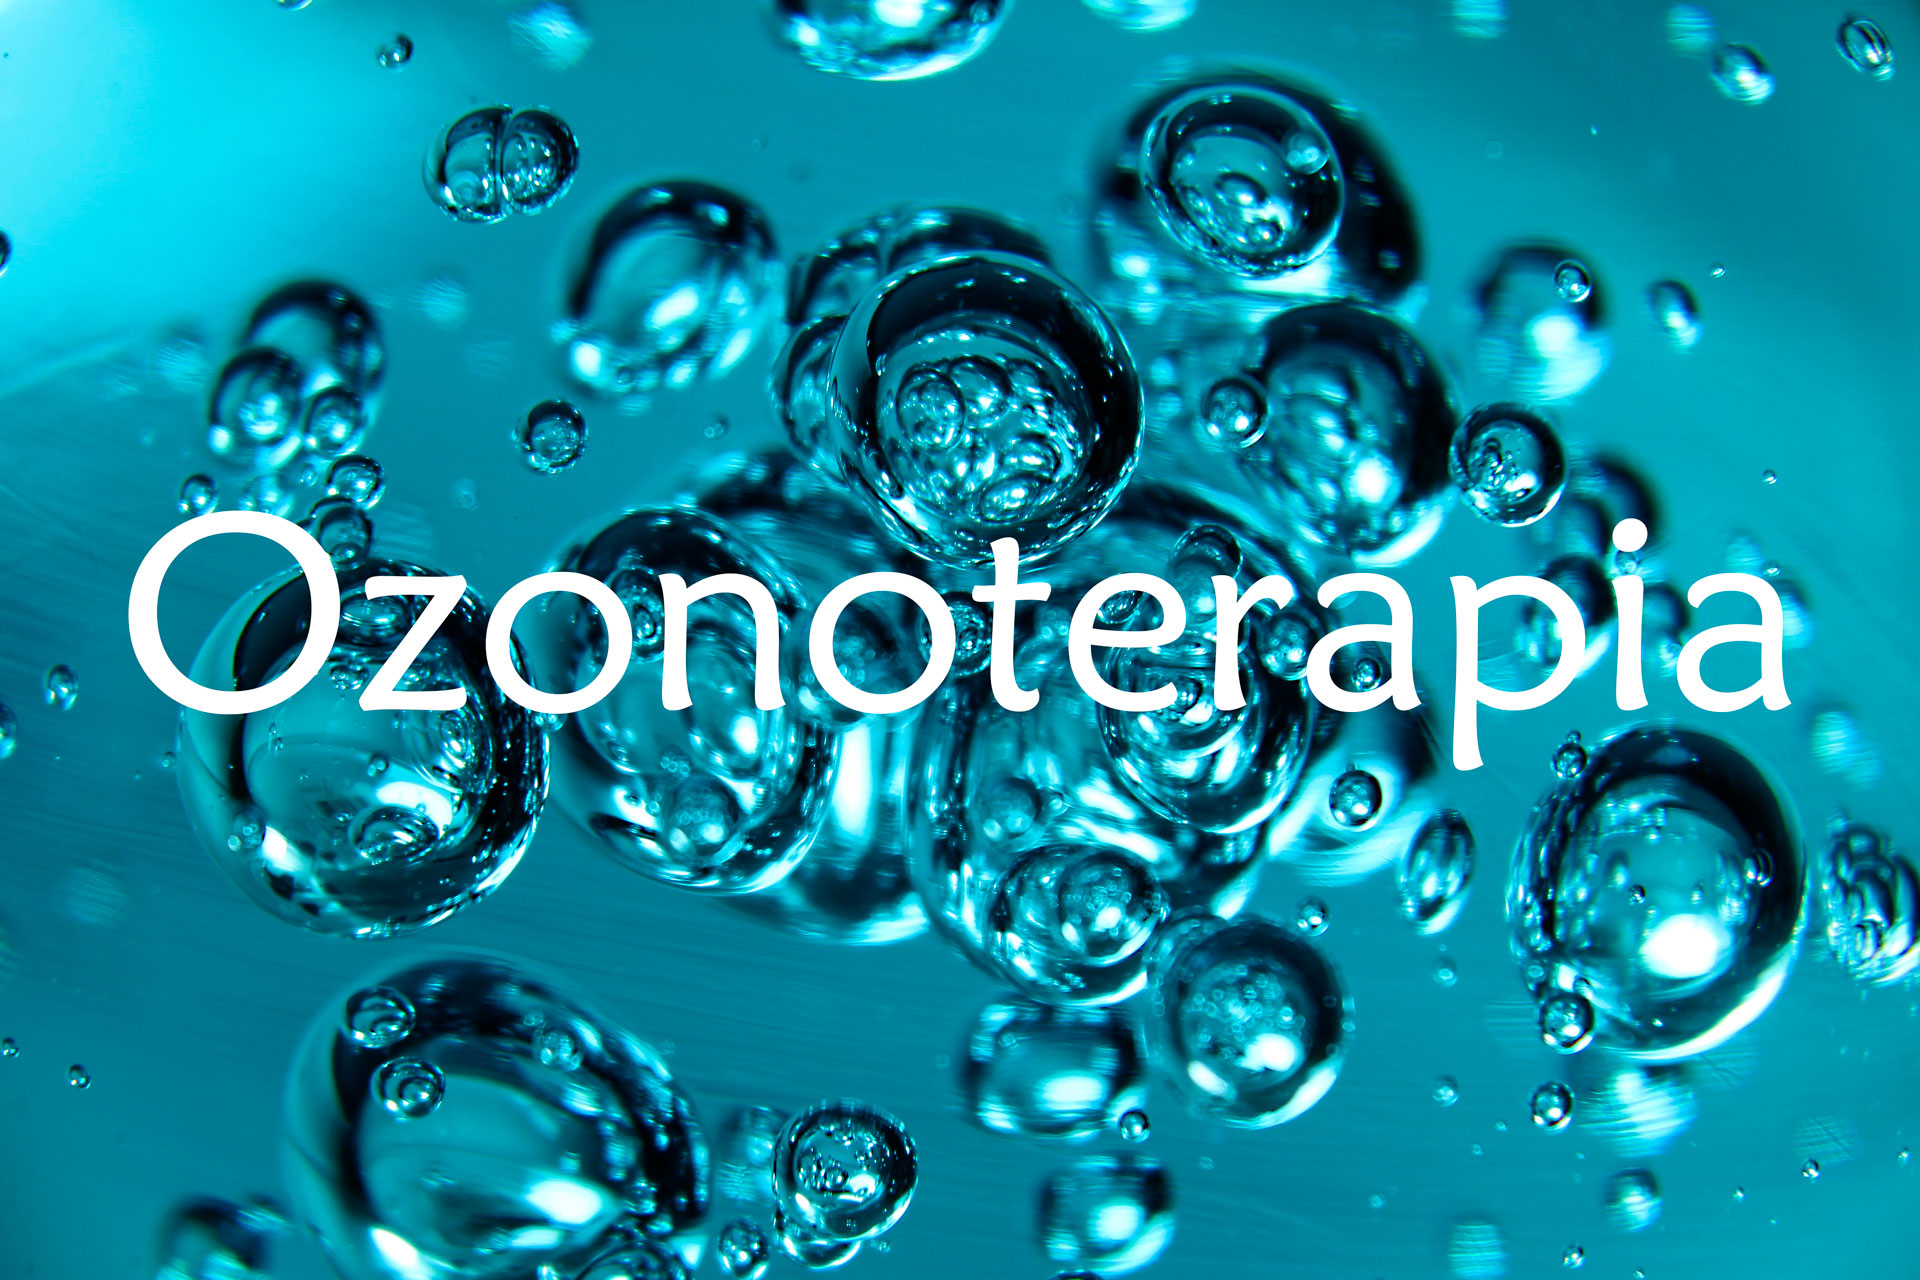 Ozonoterapia párkinson dolor columna huesos temblos esencial colón irritable colitis ulcerosa